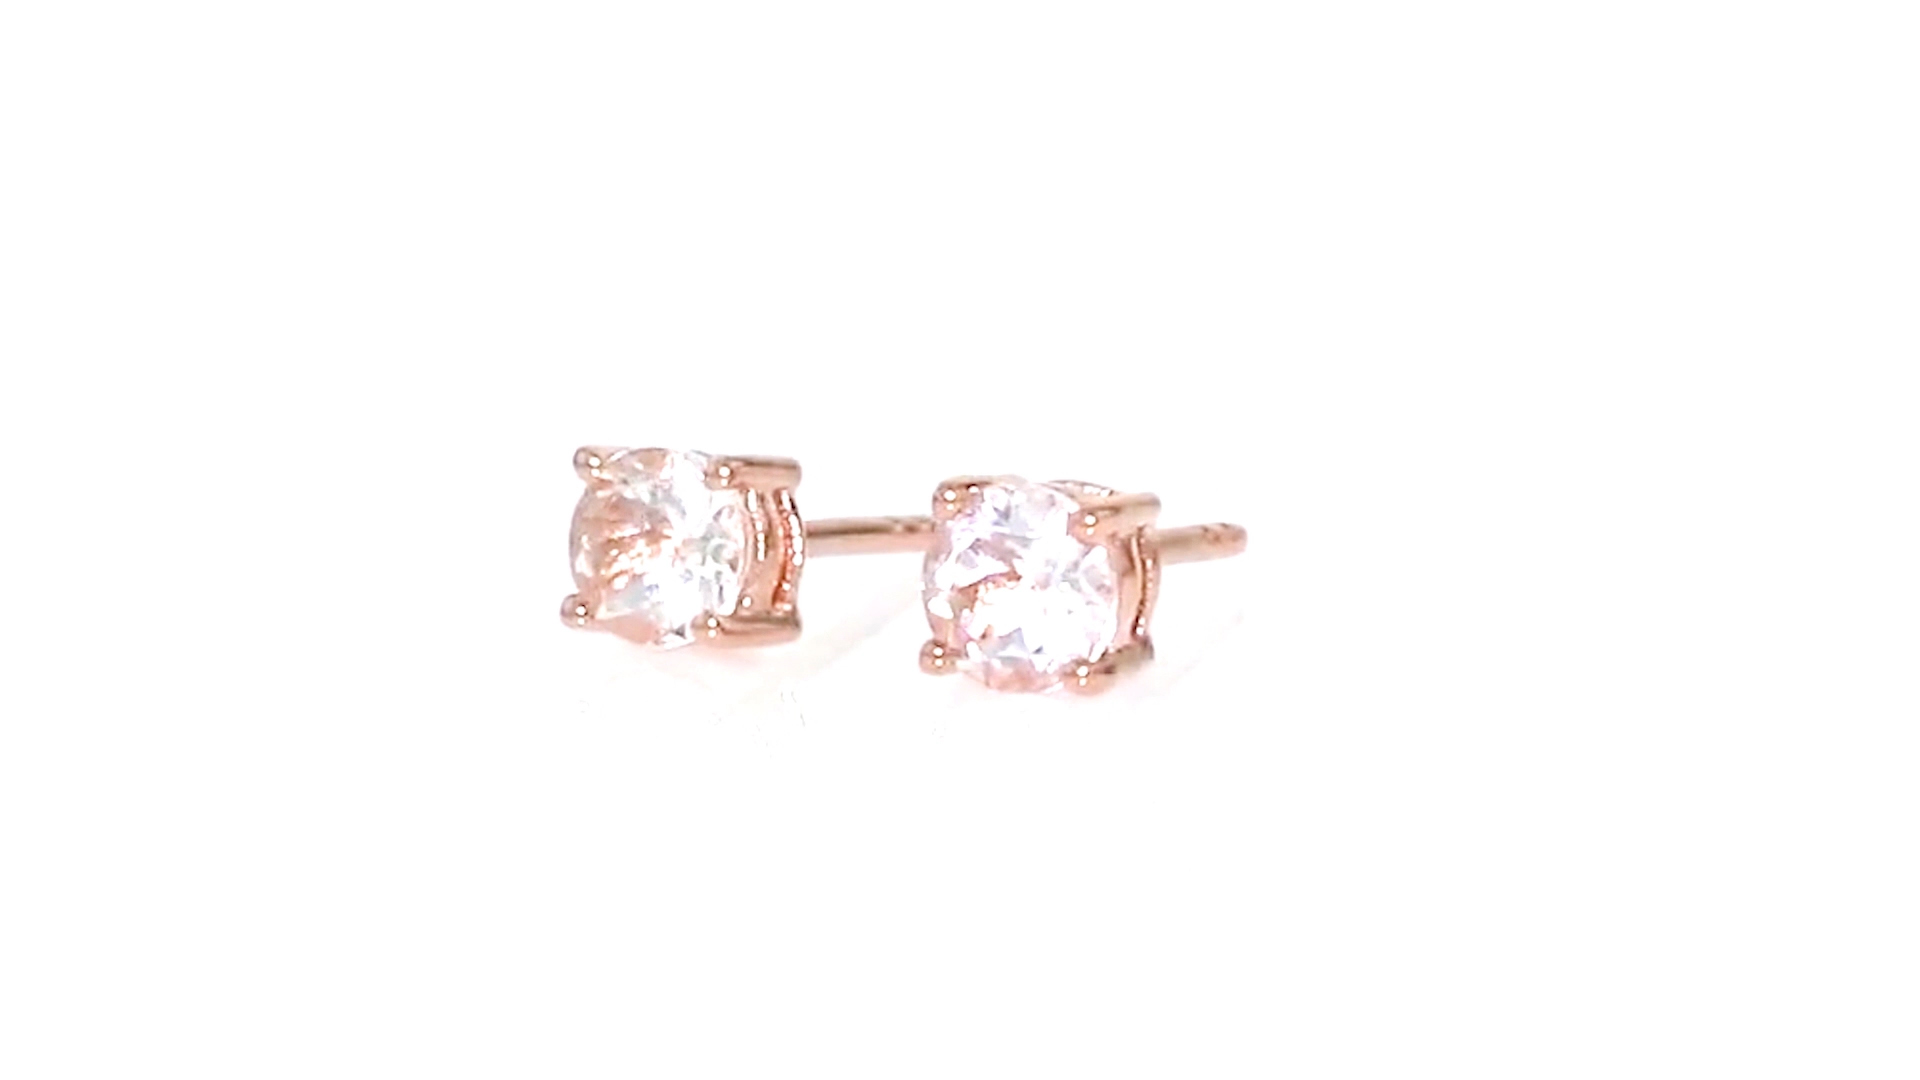 Pink Diamond Earrings - Beauty And Elegance